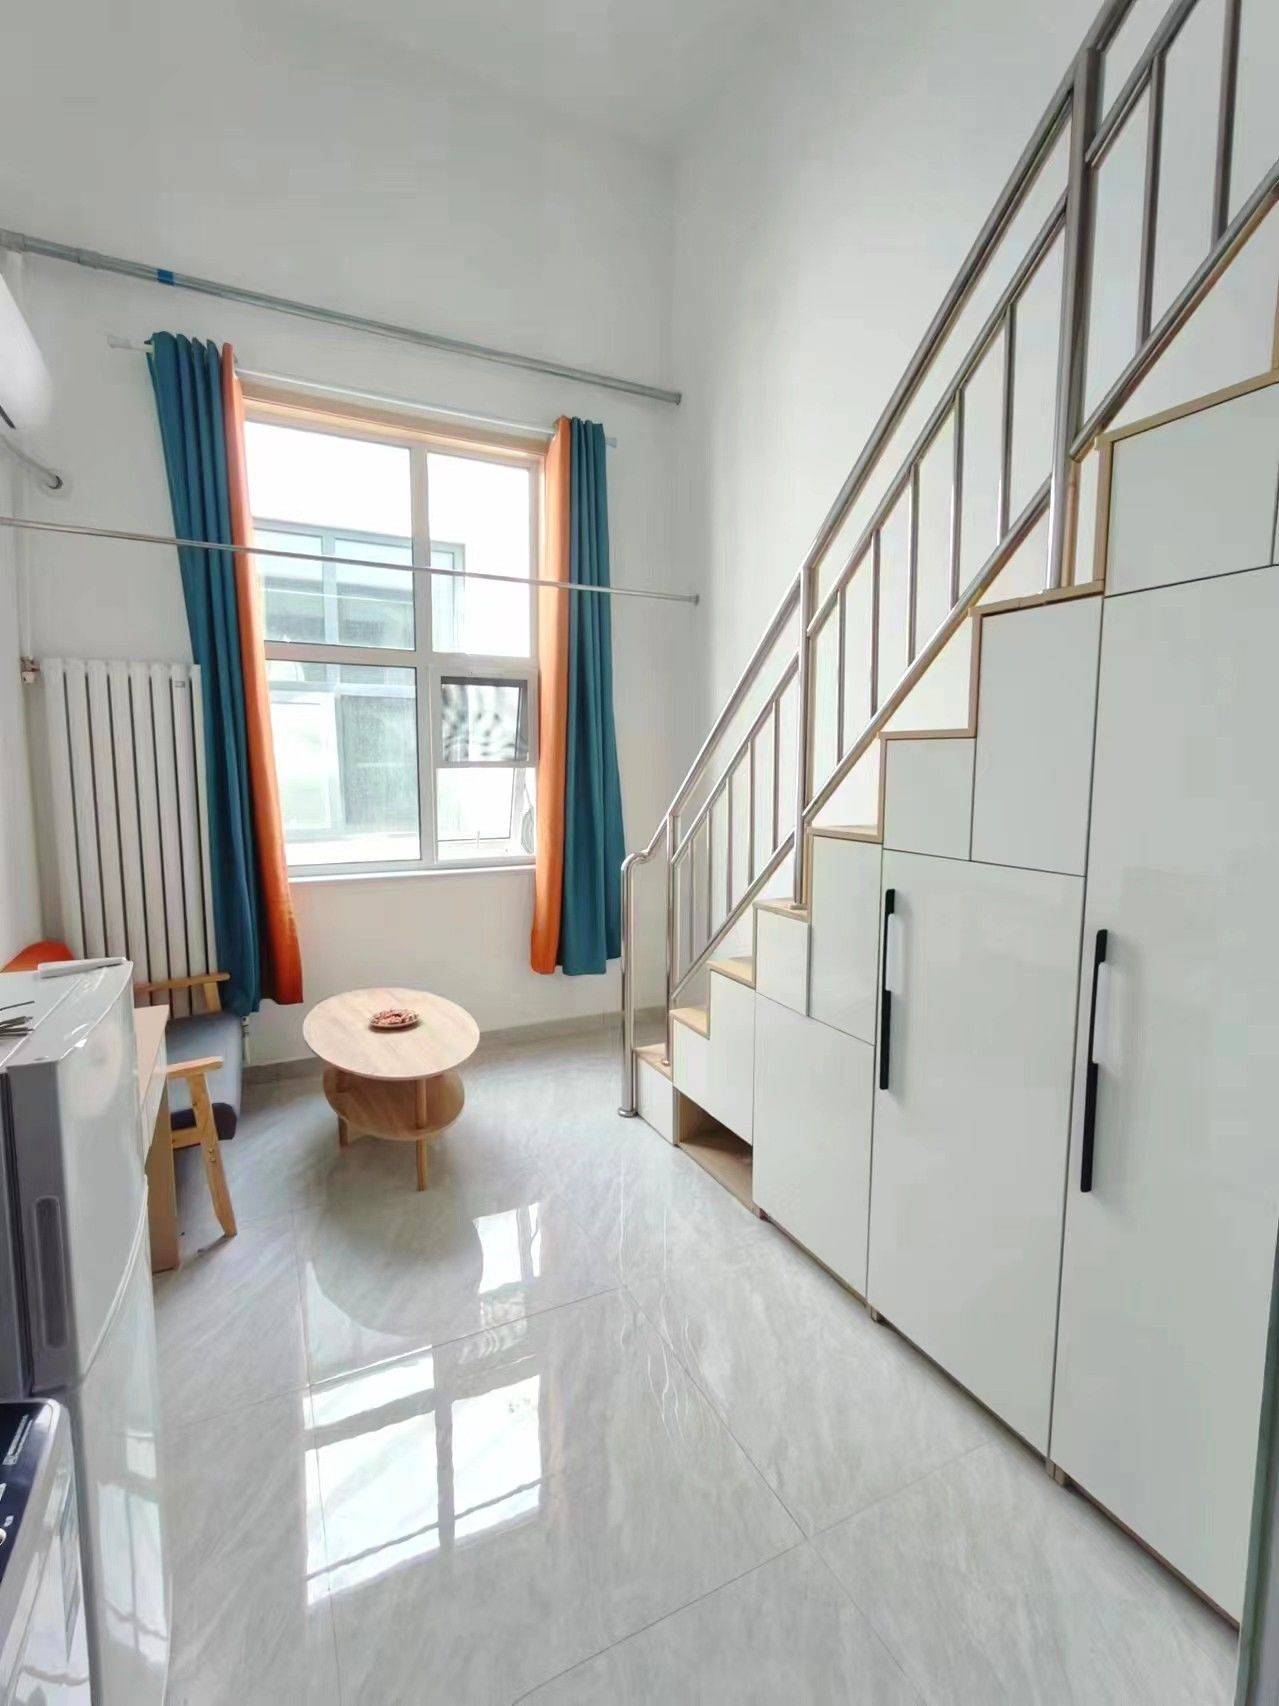 Beijing-Tongzhou-Cozy Home,Clean&Comfy,No Gender Limit,Pet Friendly